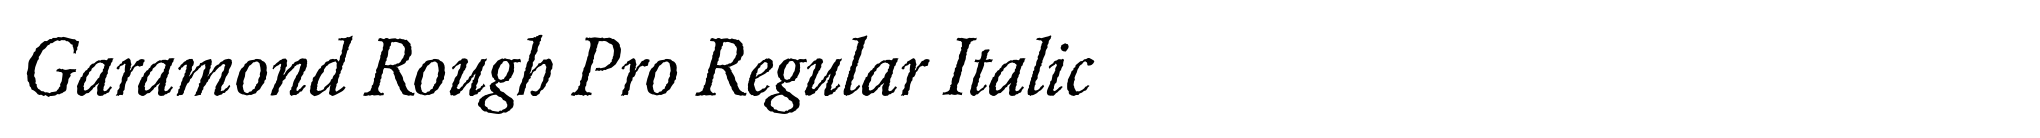 Garamond Rough Pro Regular Italic image